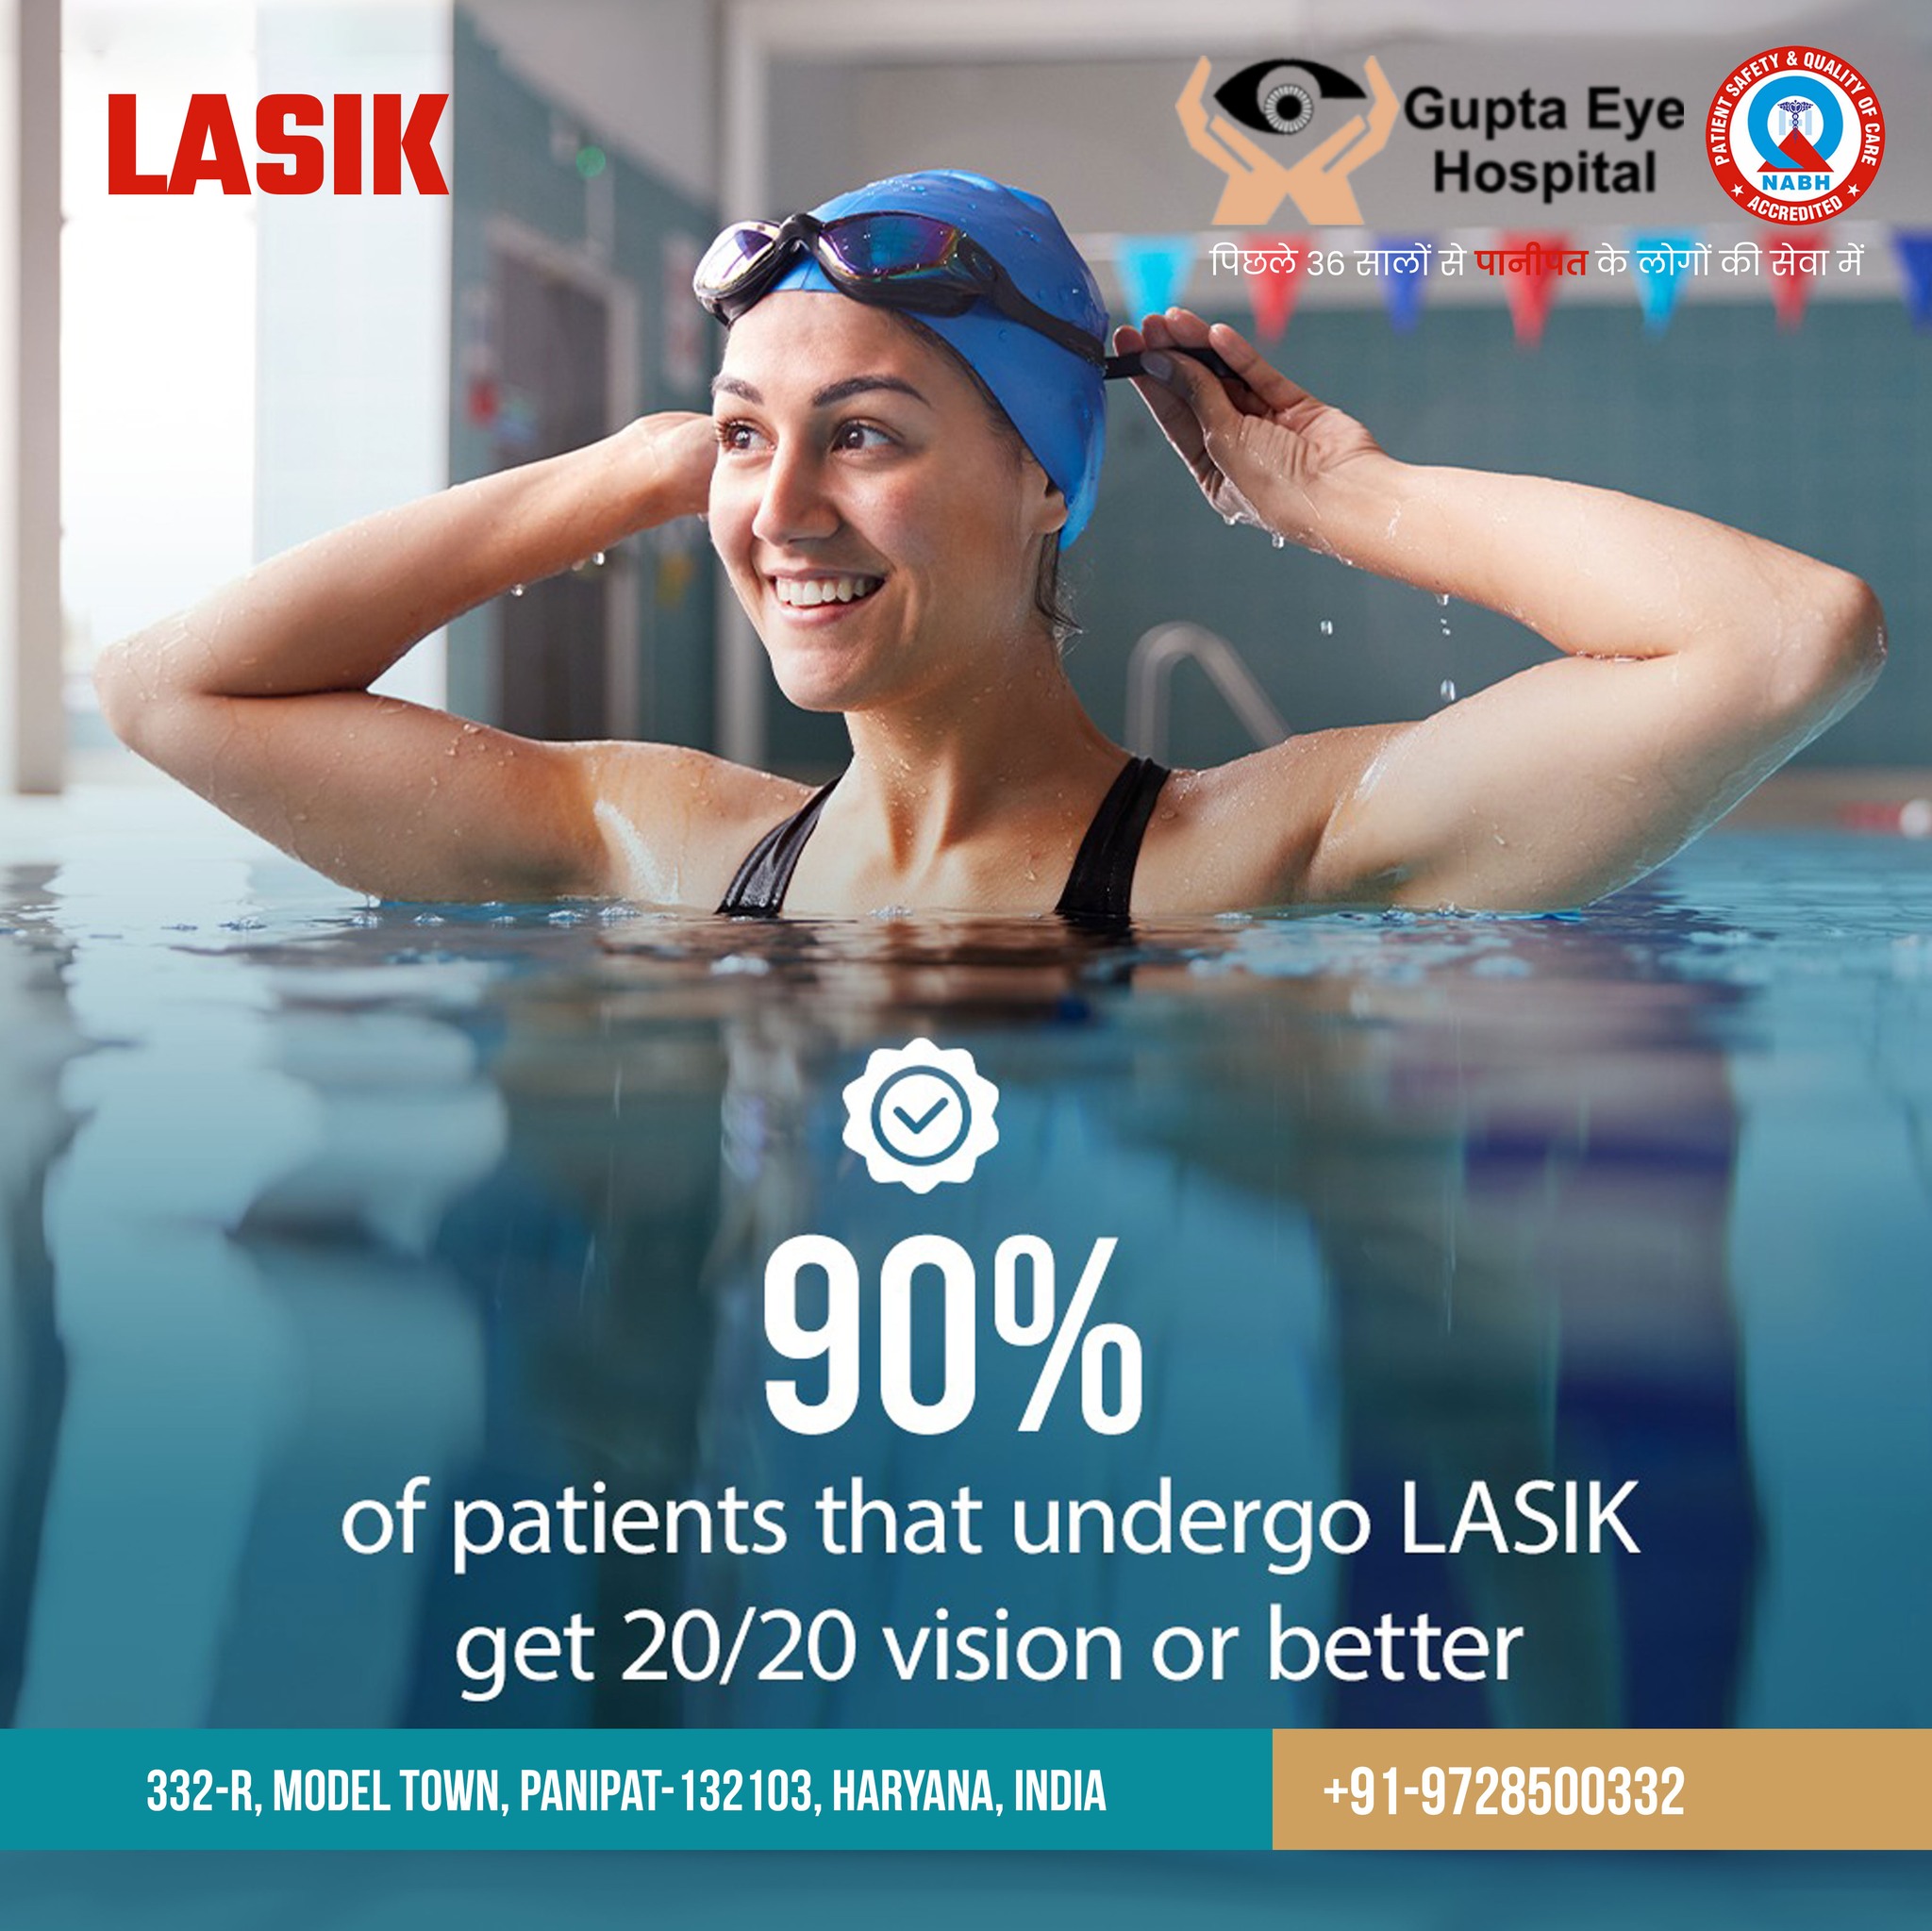 Most Trusted Eye Hospital For LASIk Surgery in Panipat | Gupta Eye Hospital - Panipat